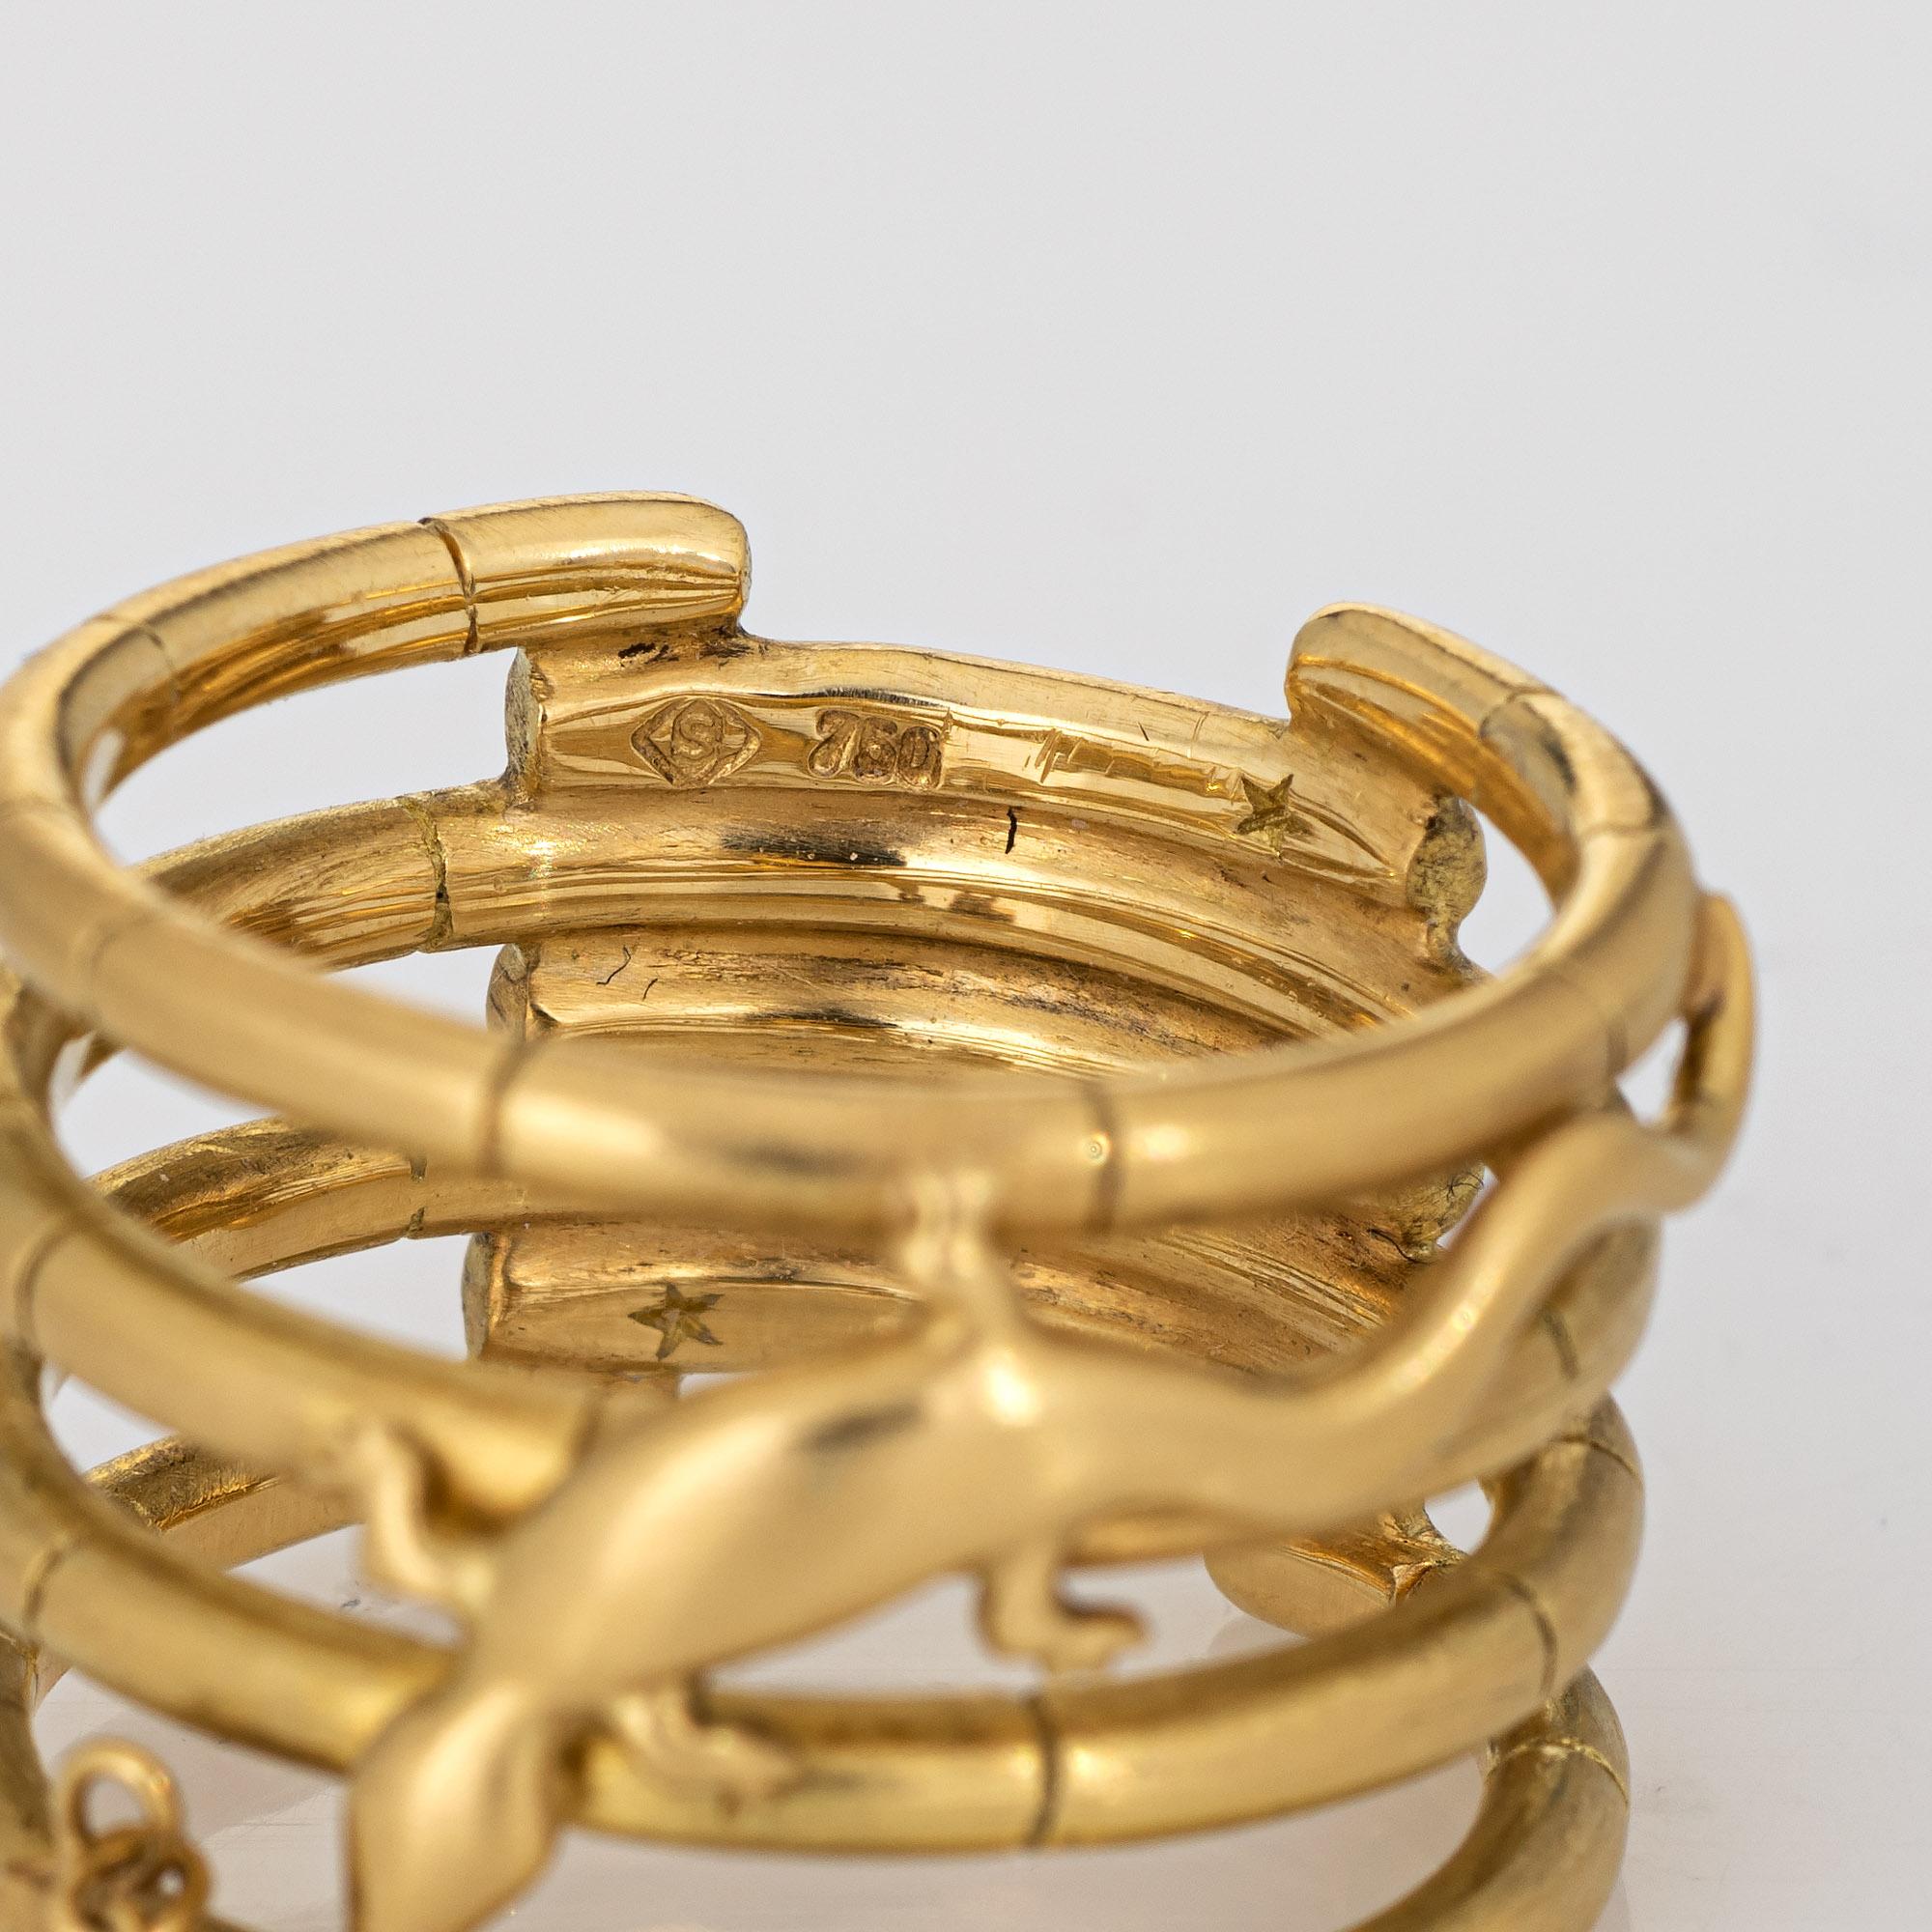 H Stern Lizard Ring Diamond Wide Band 18k Yellow Gold Estate Fine Jewelry 1